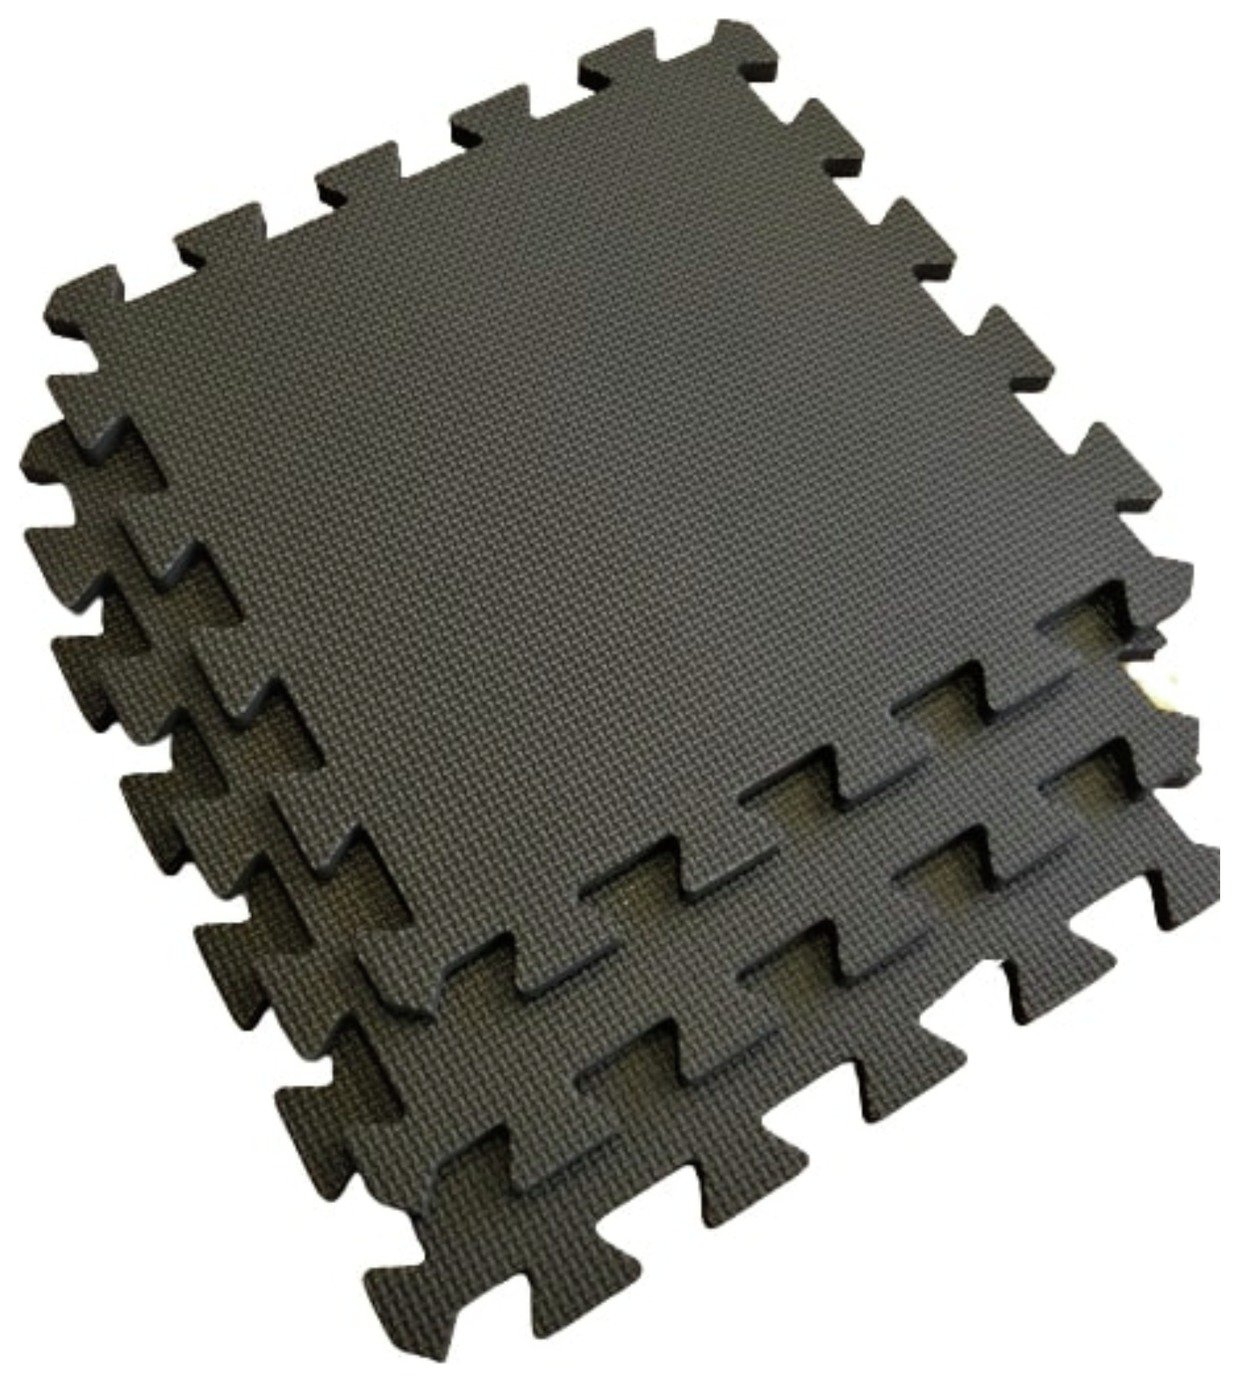 Warm Floor Plastic Floor Tiling Kit - 8 x 6ft